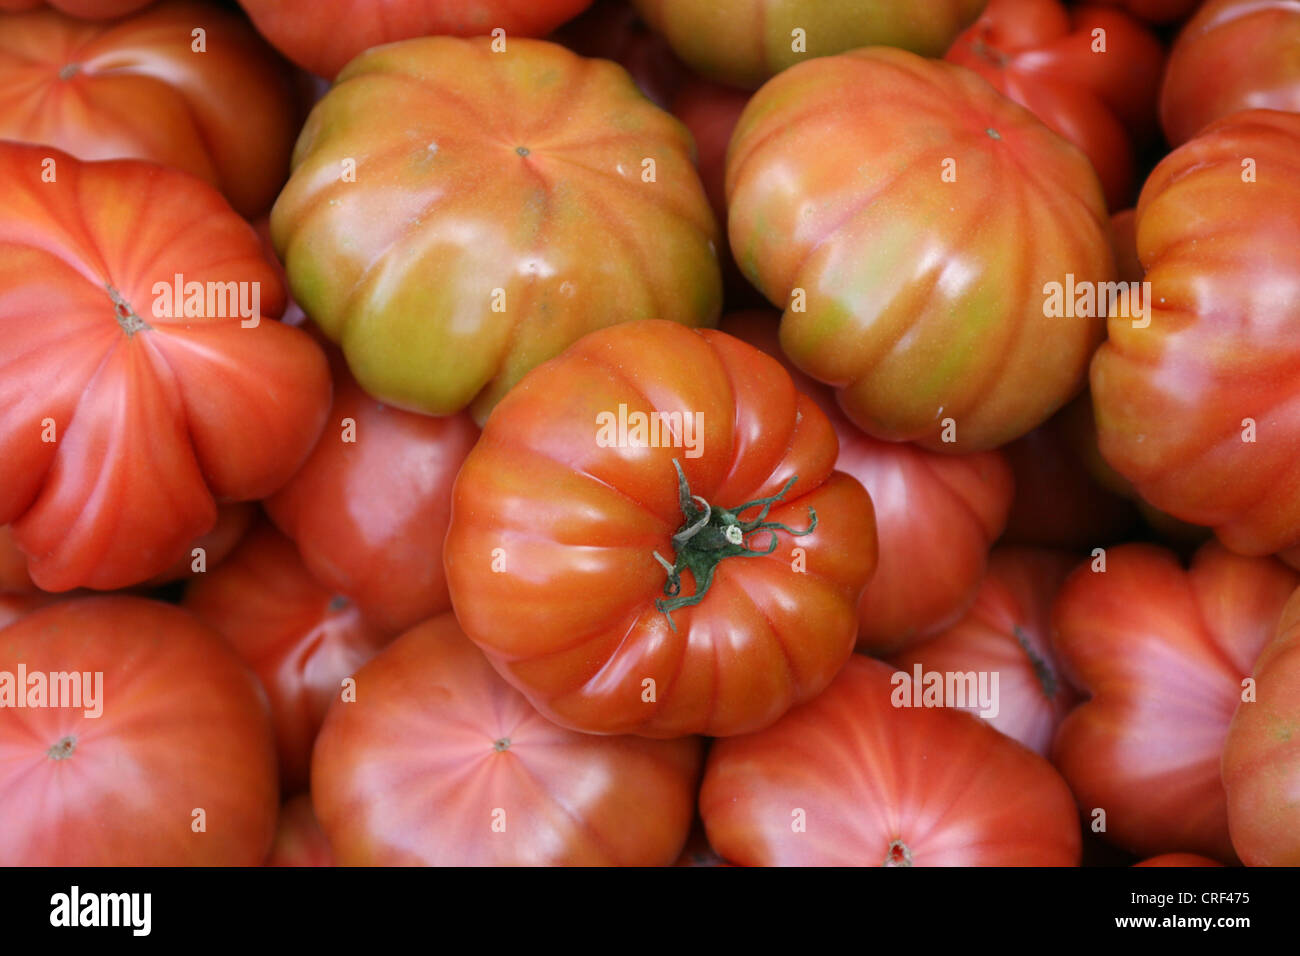 garden tomato (Solanum lycopersicum, Lycopersicon esculentum), sulcated tomatoes Stock Photo